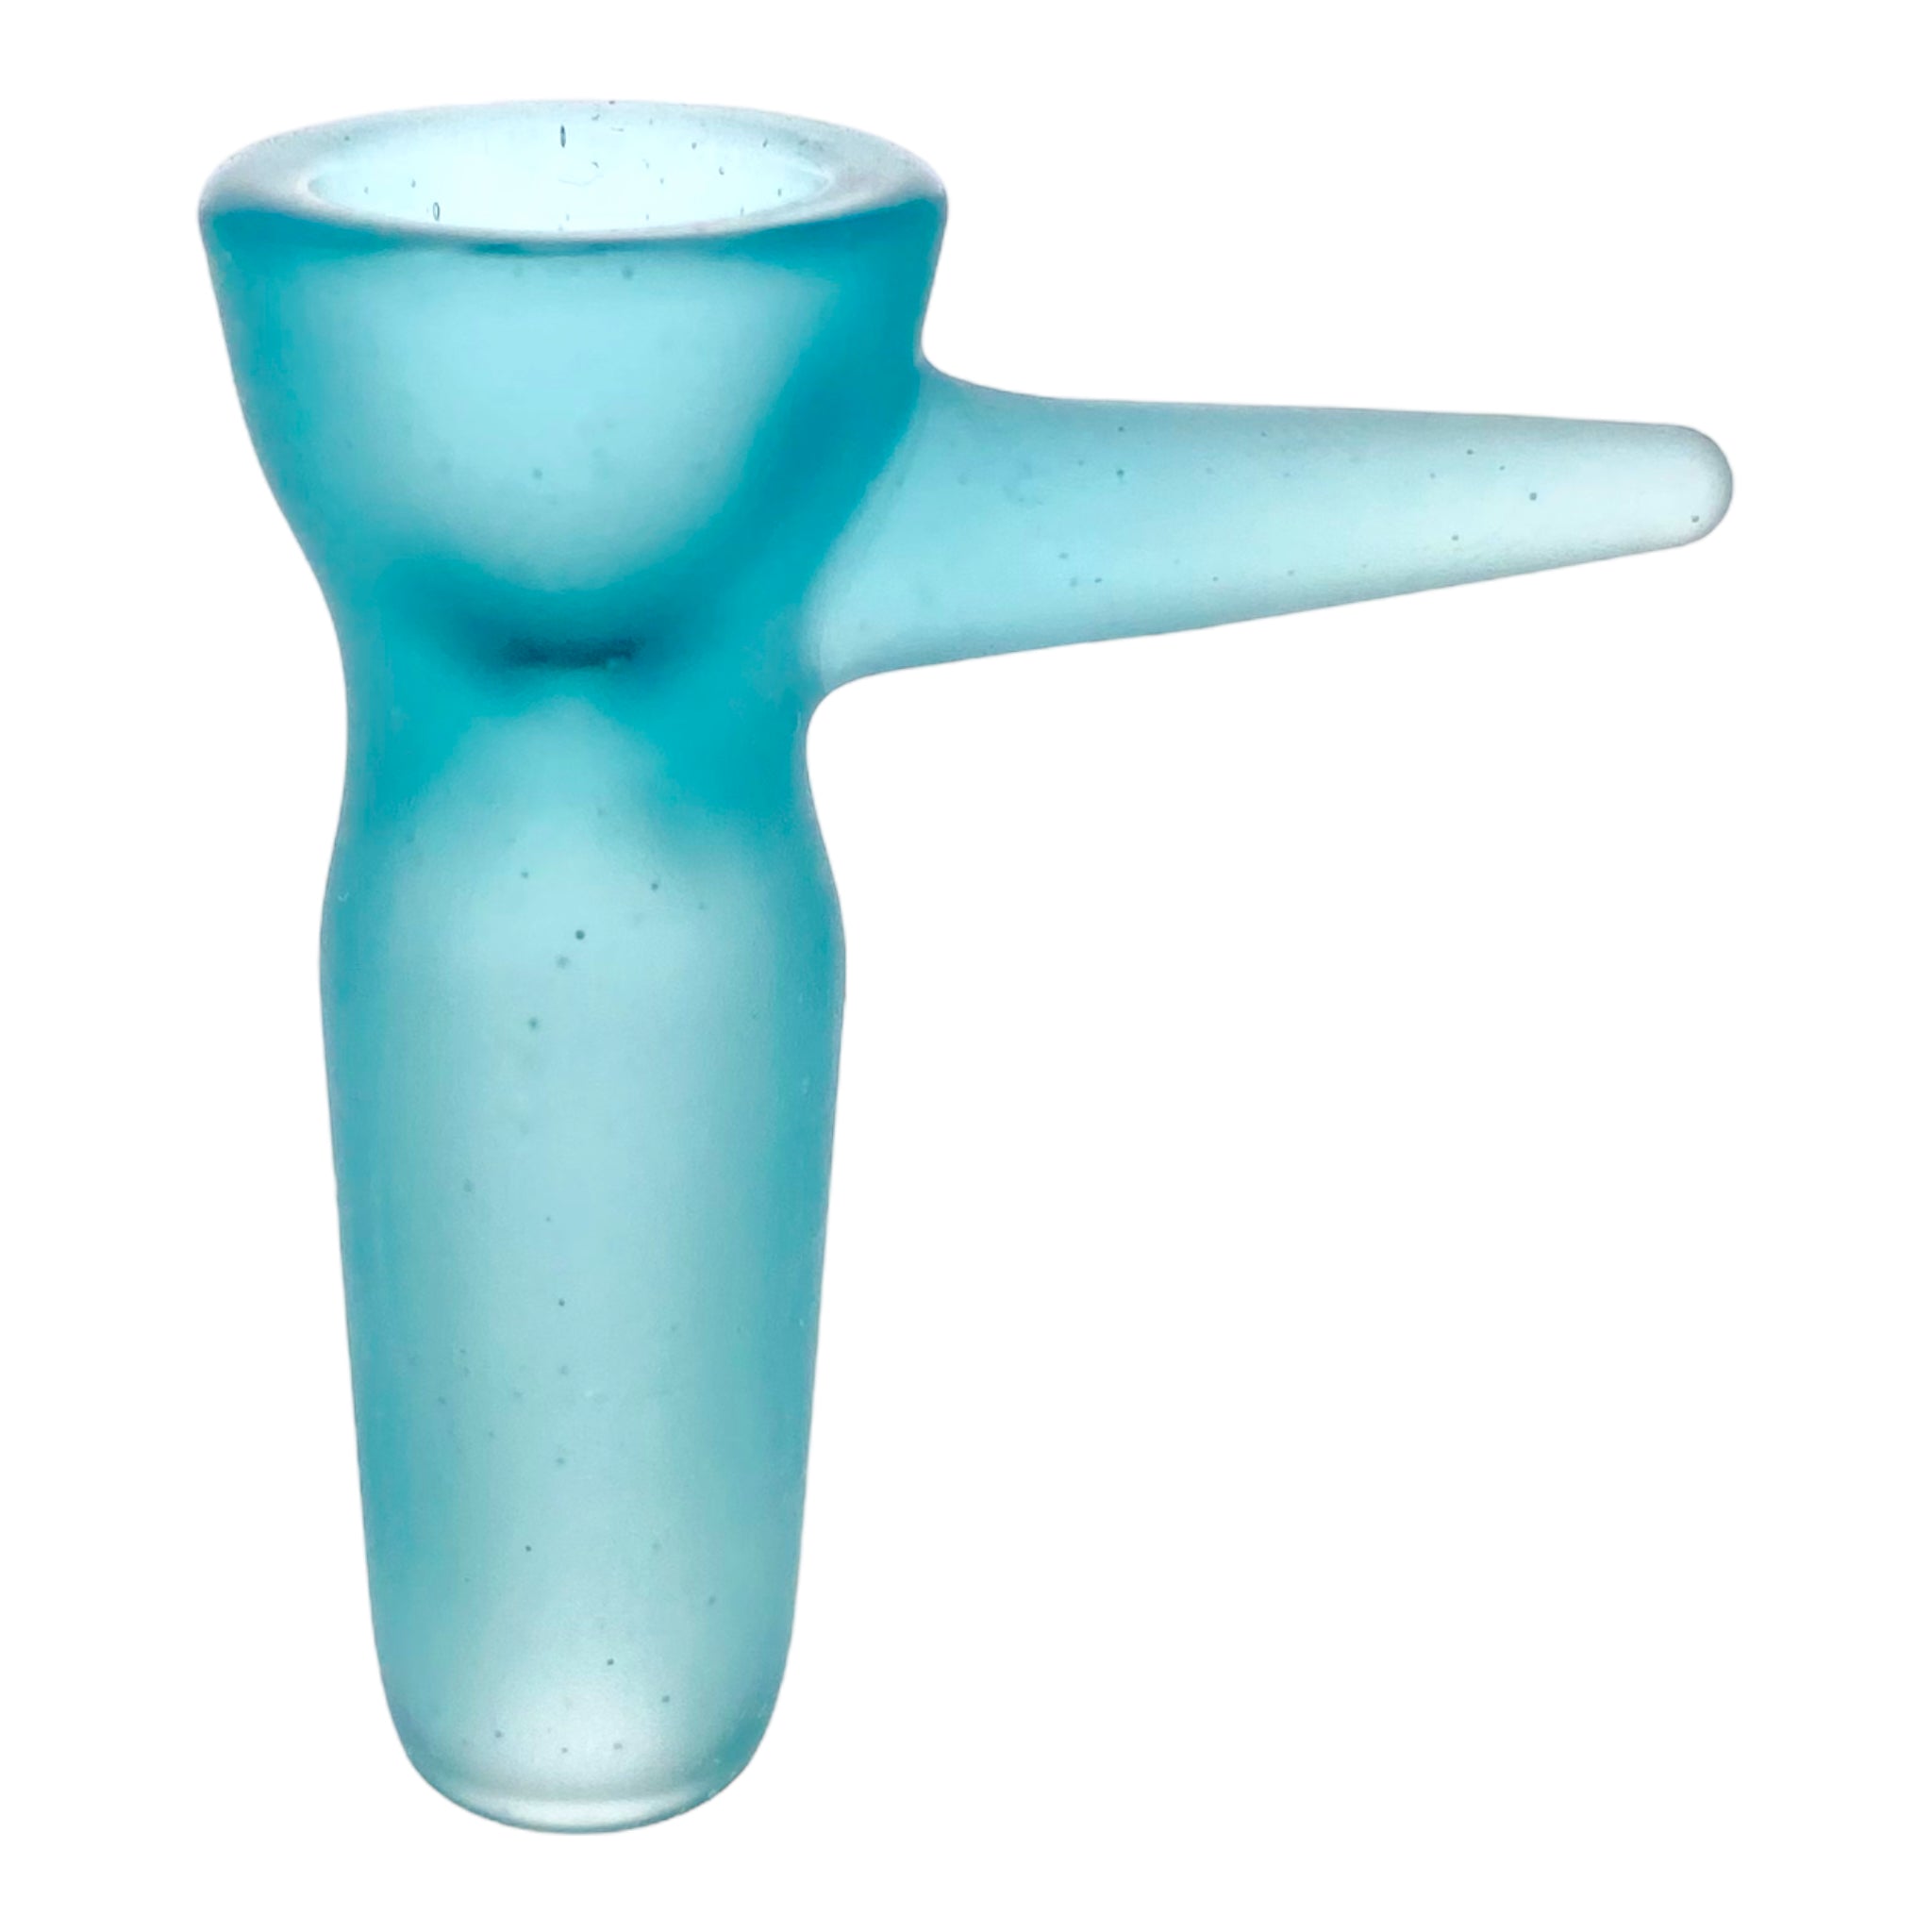 Optera Glass - Sandblasted Aqua Blue With Aqua Blue Handle Full Color - 14mm Bowl Piece